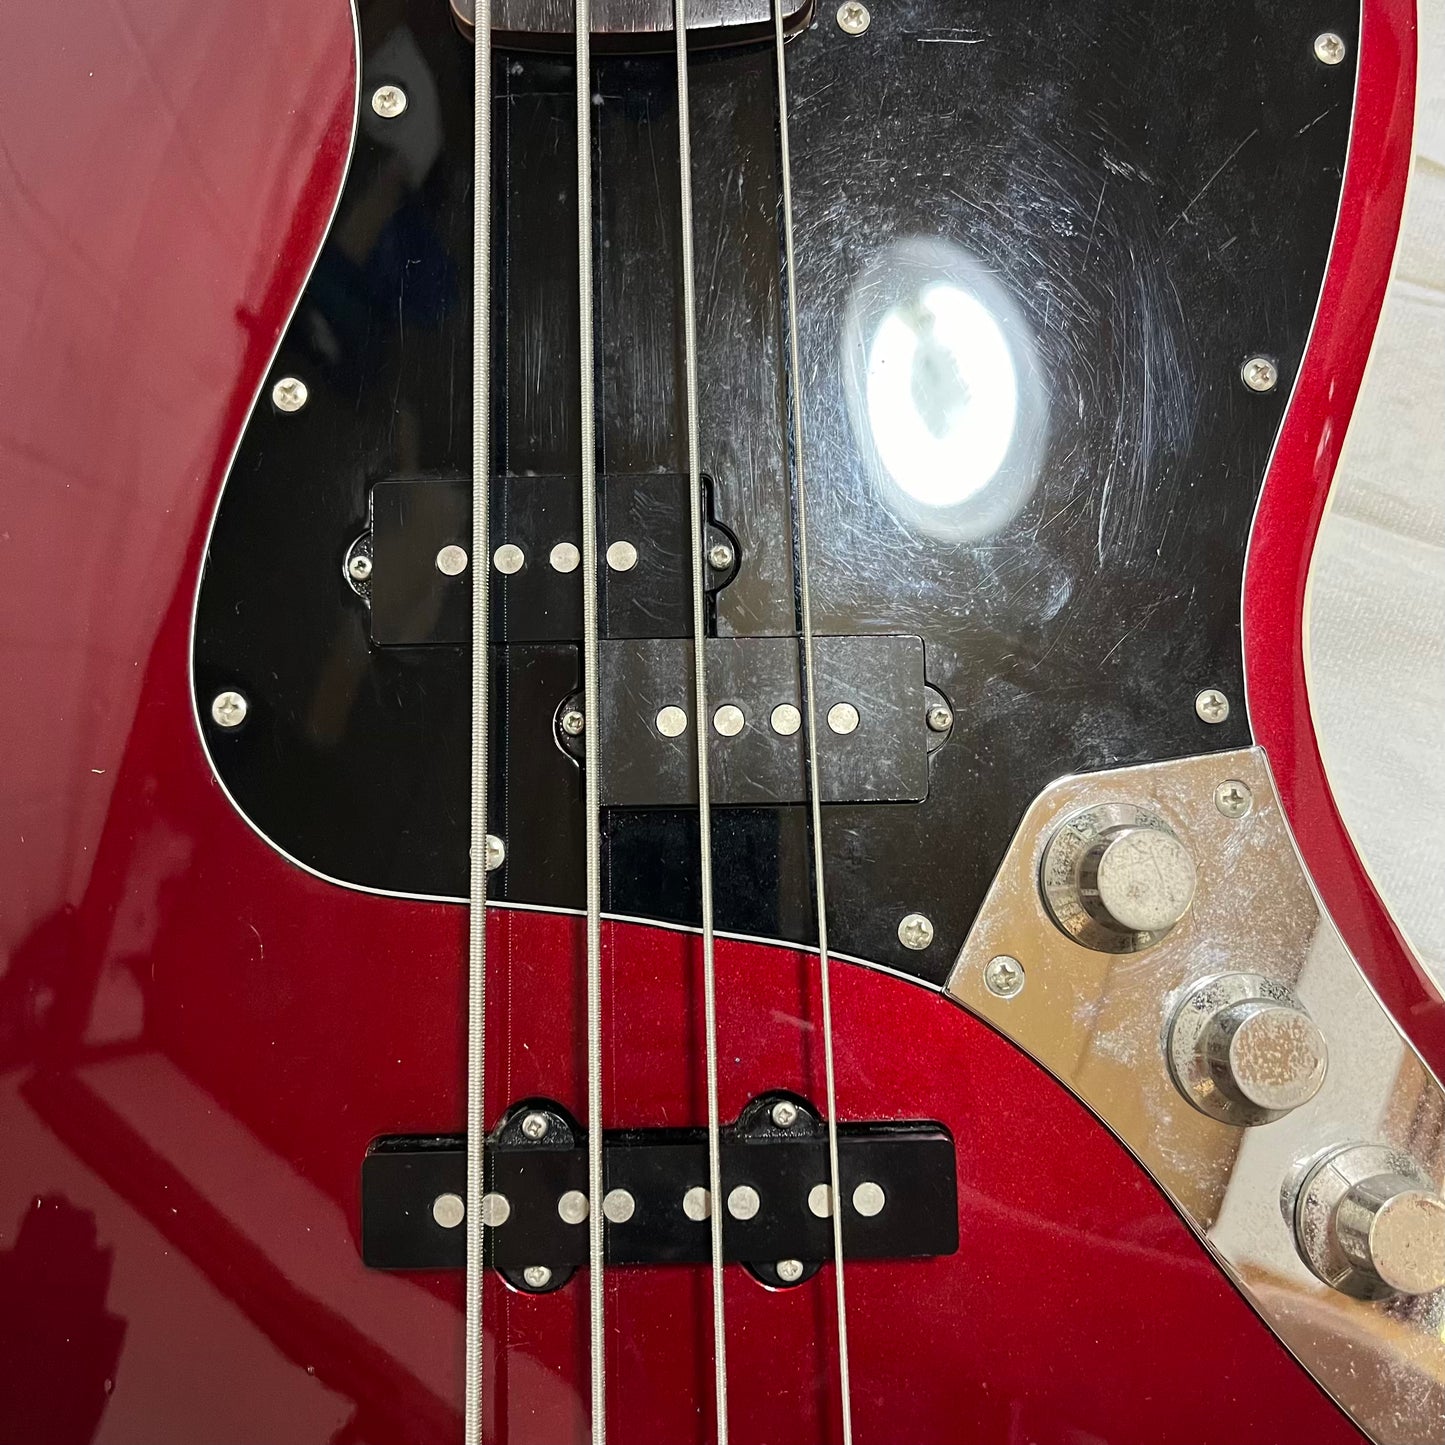 Fender AJB Aerodyne Jazz Bass 2003 - 2017 - Old Candy Apple Red